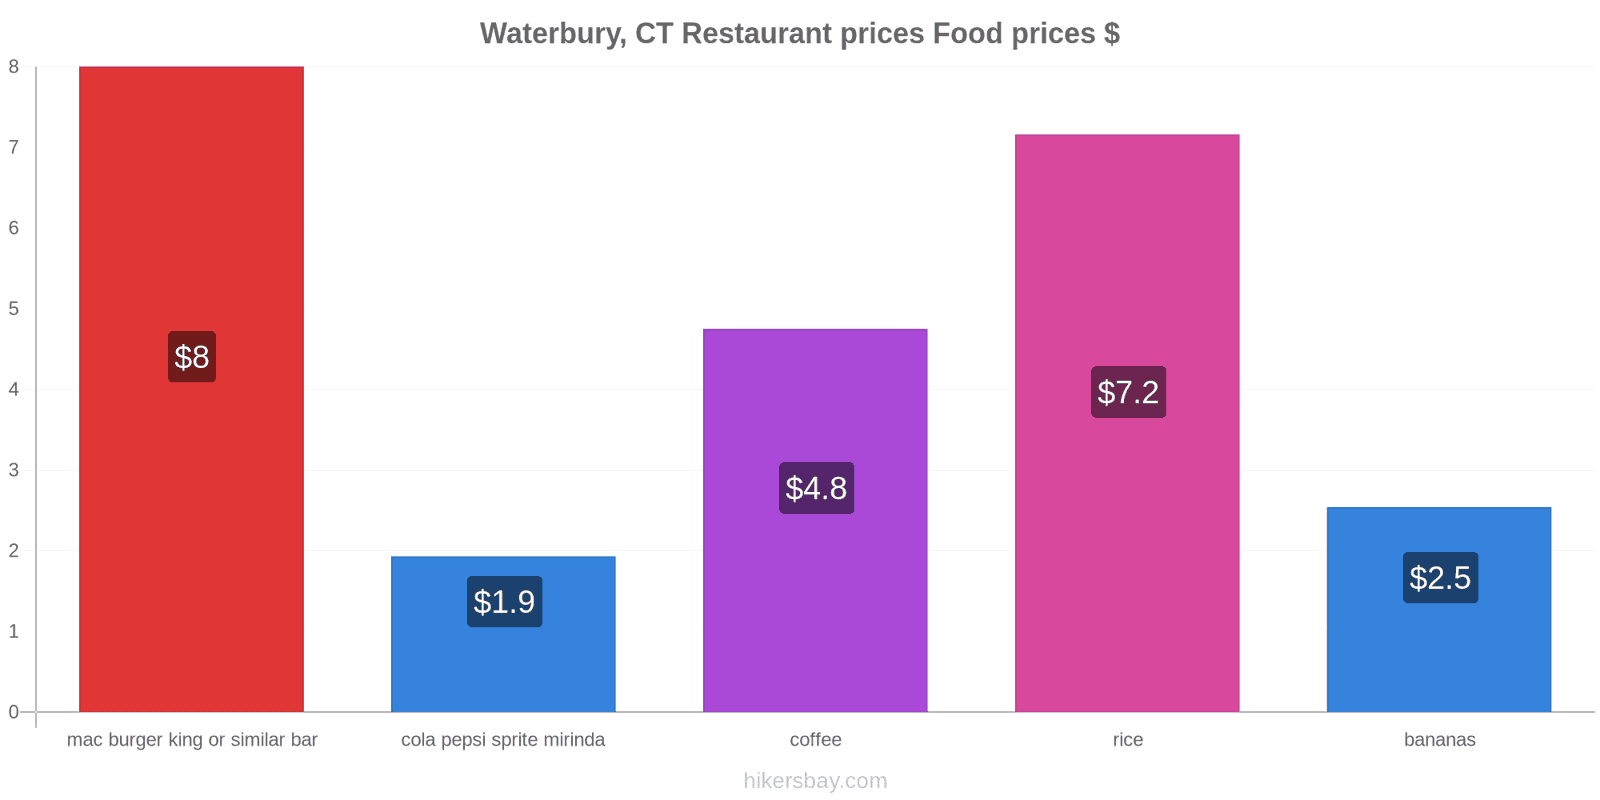 Waterbury, CT price changes hikersbay.com